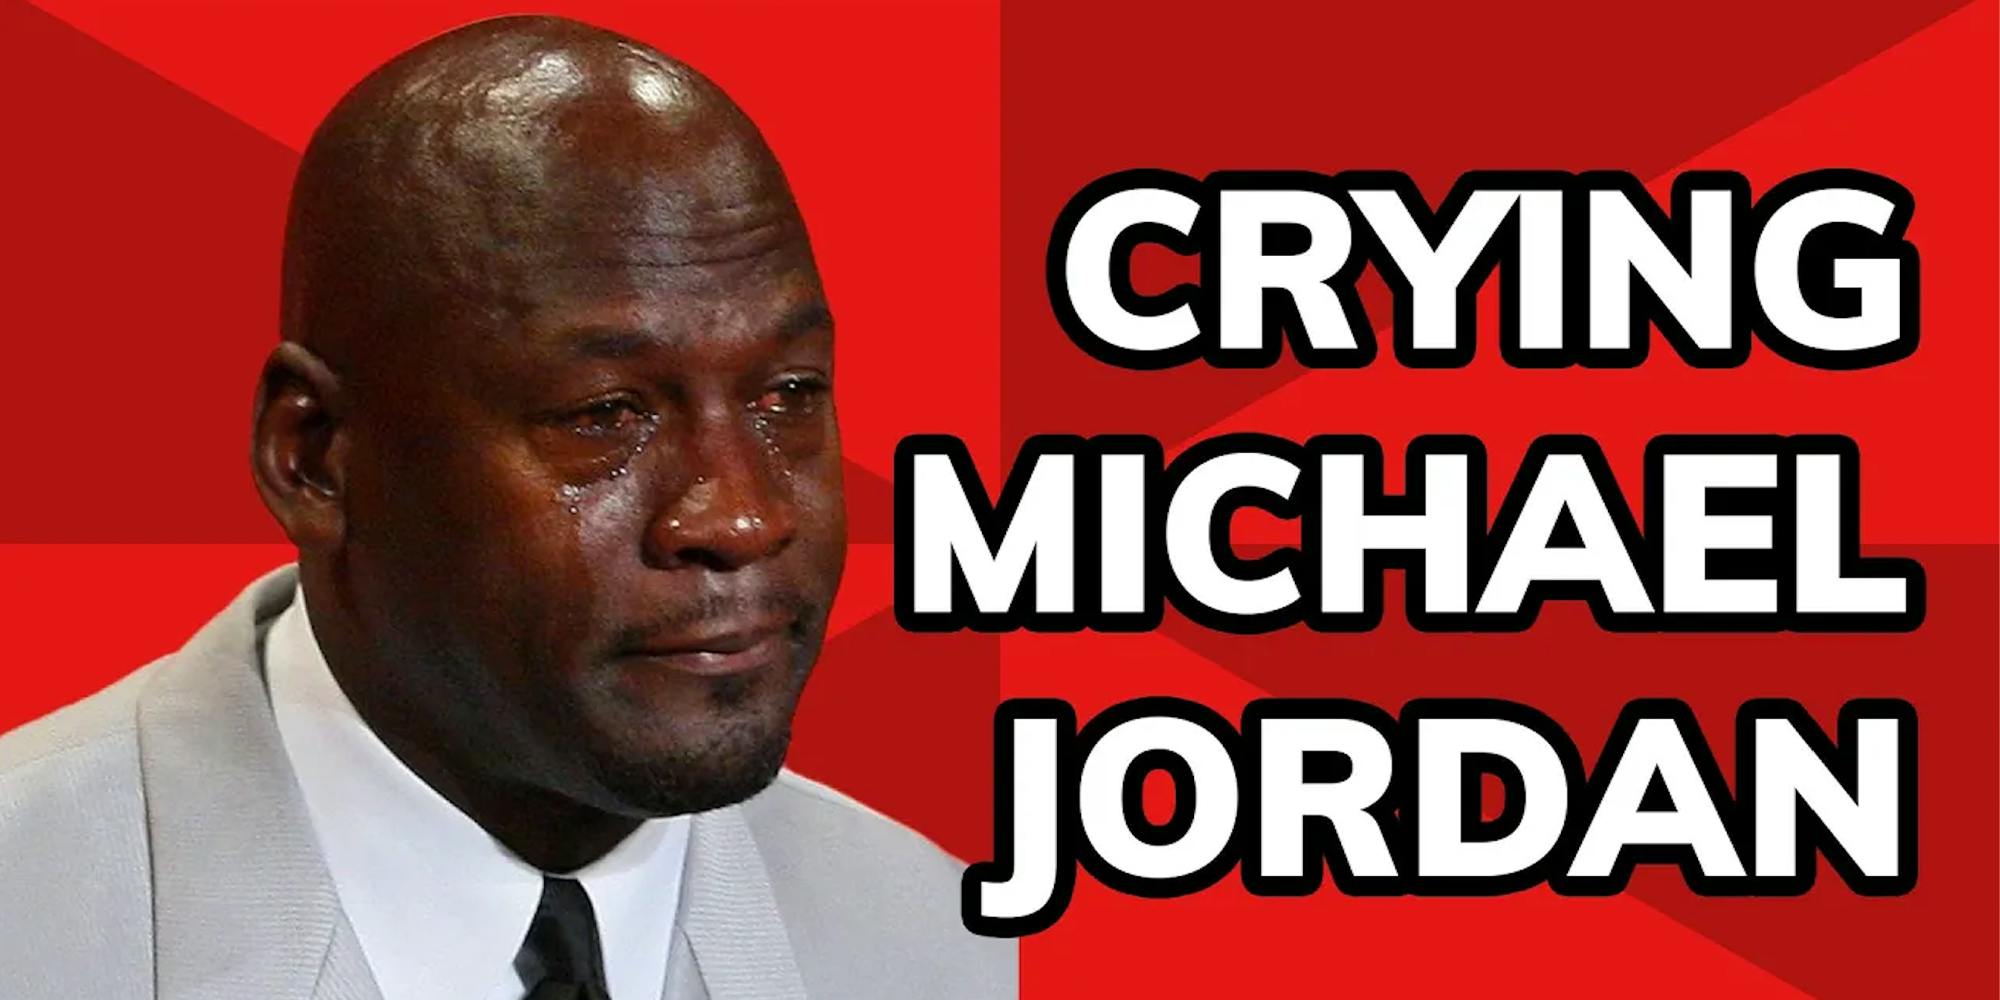 crying jordan meme on a red meme background